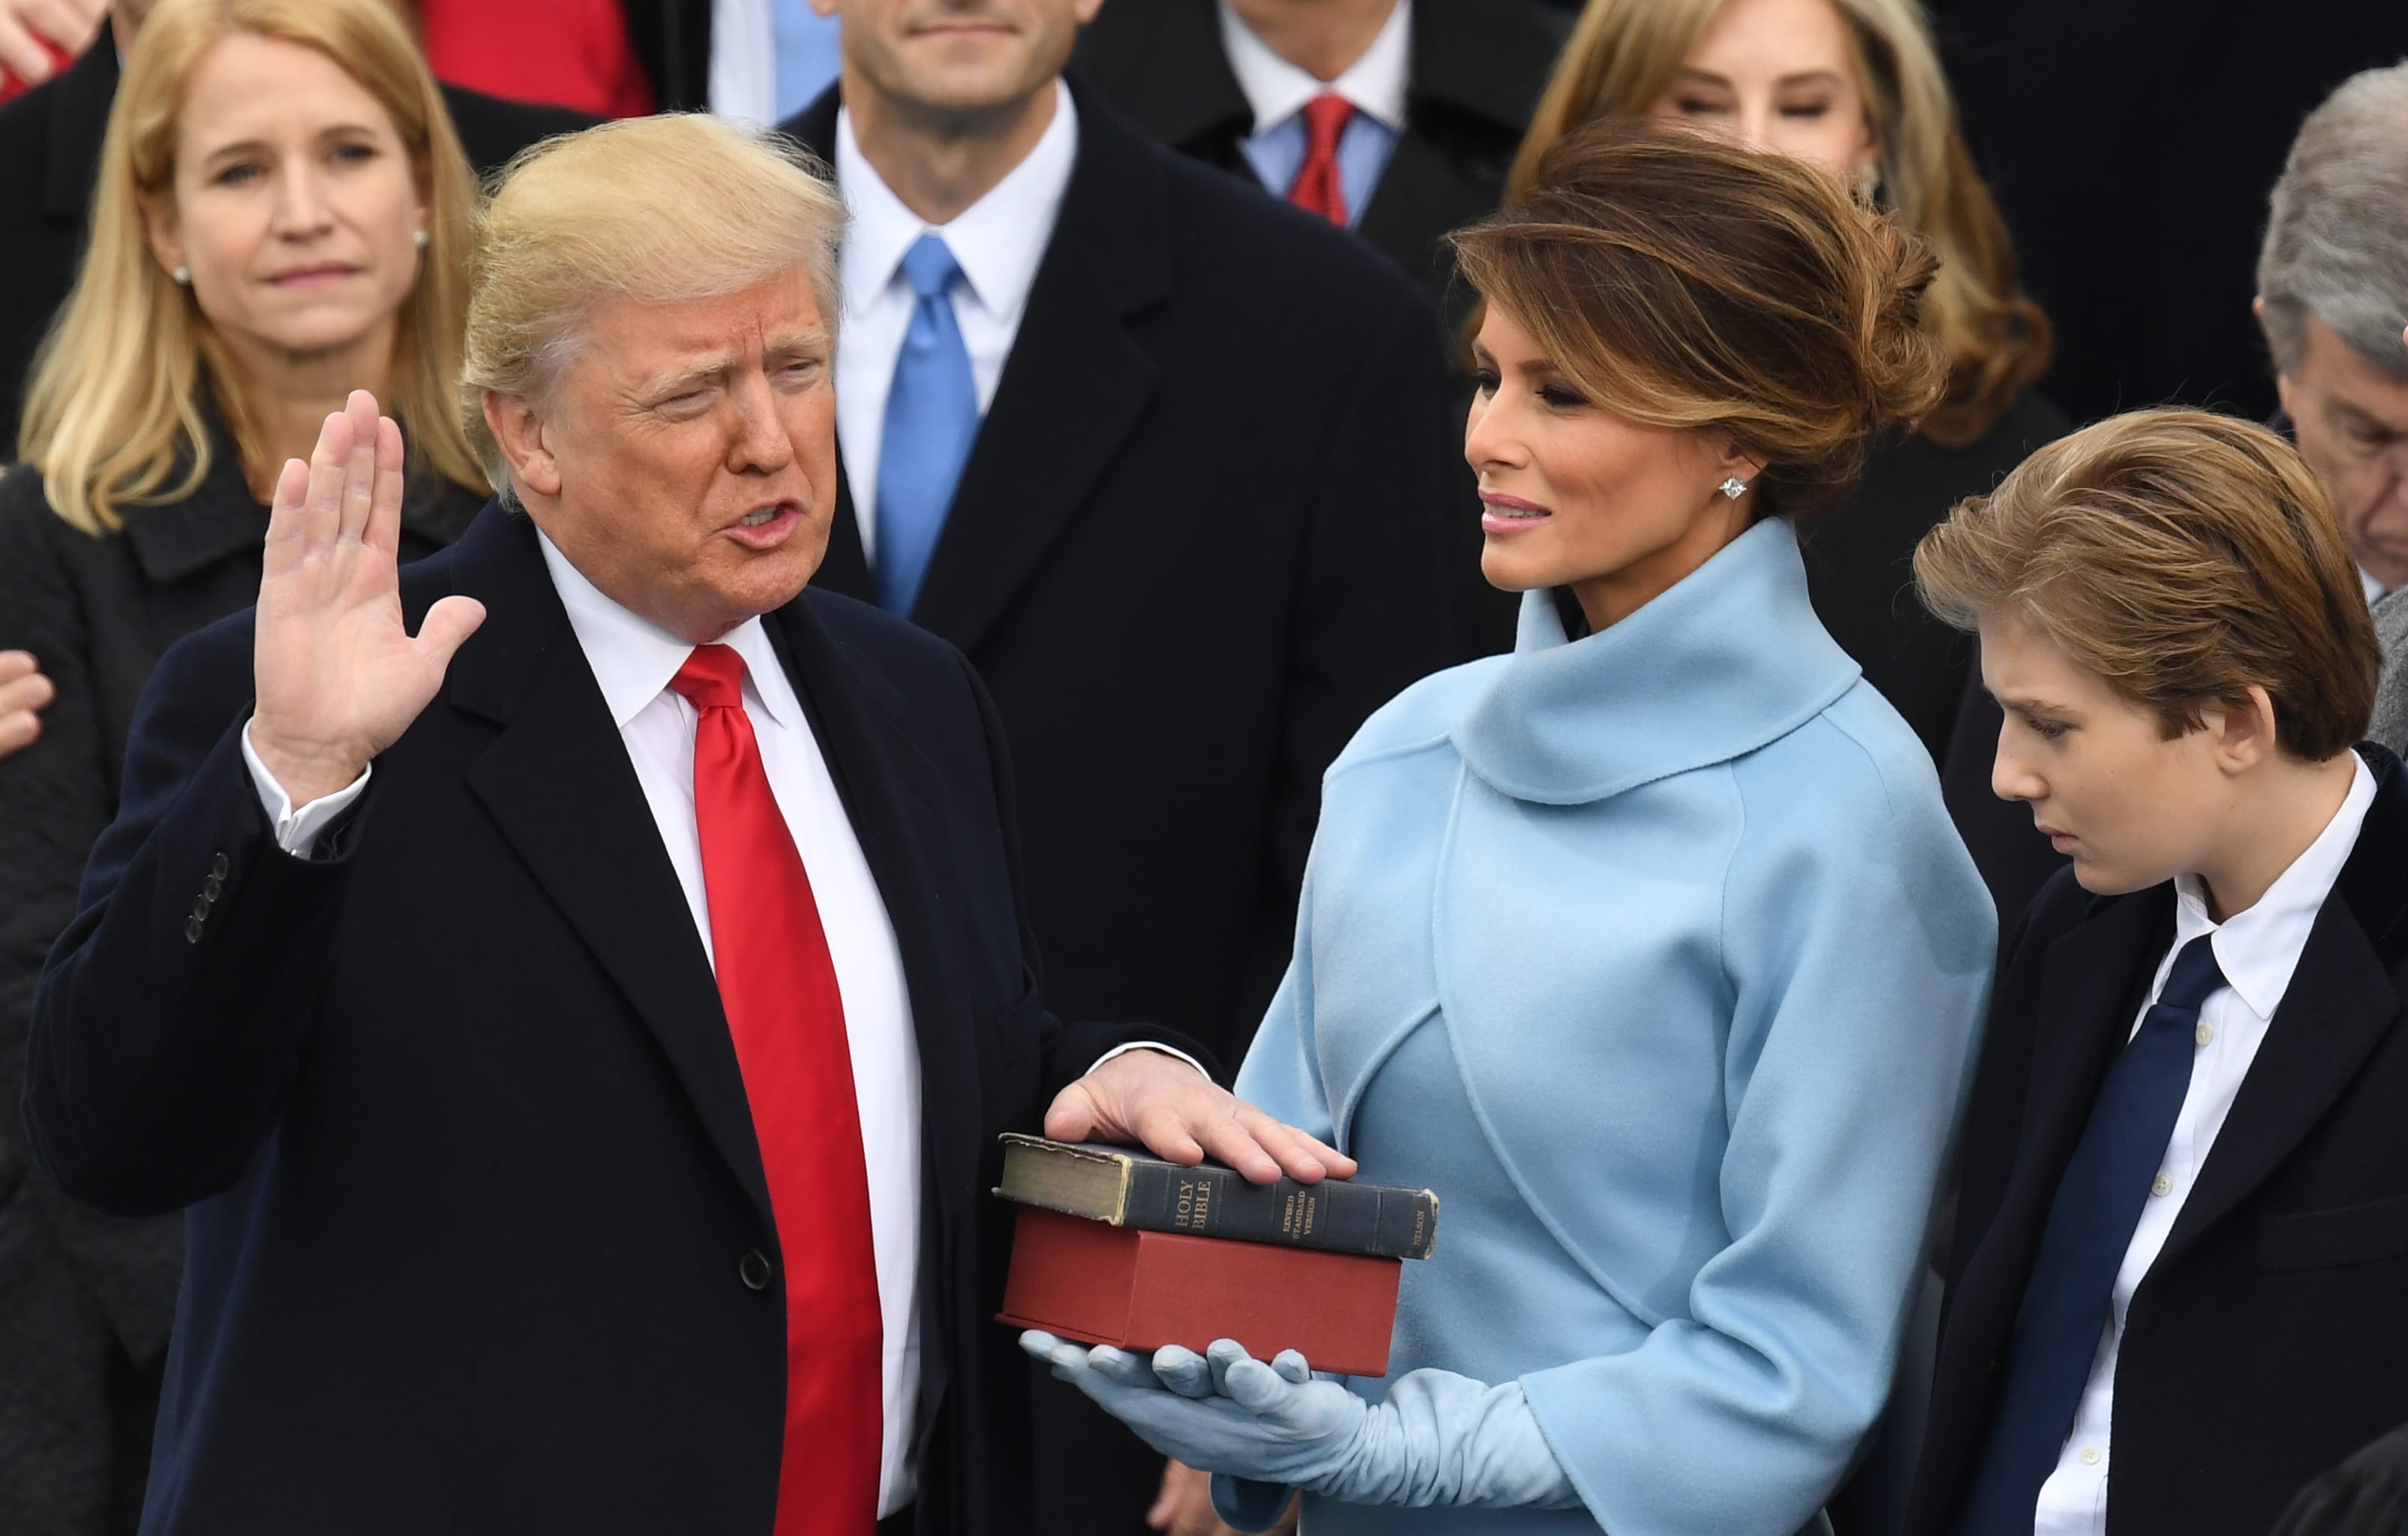 Donald Trump is sworn in as President.